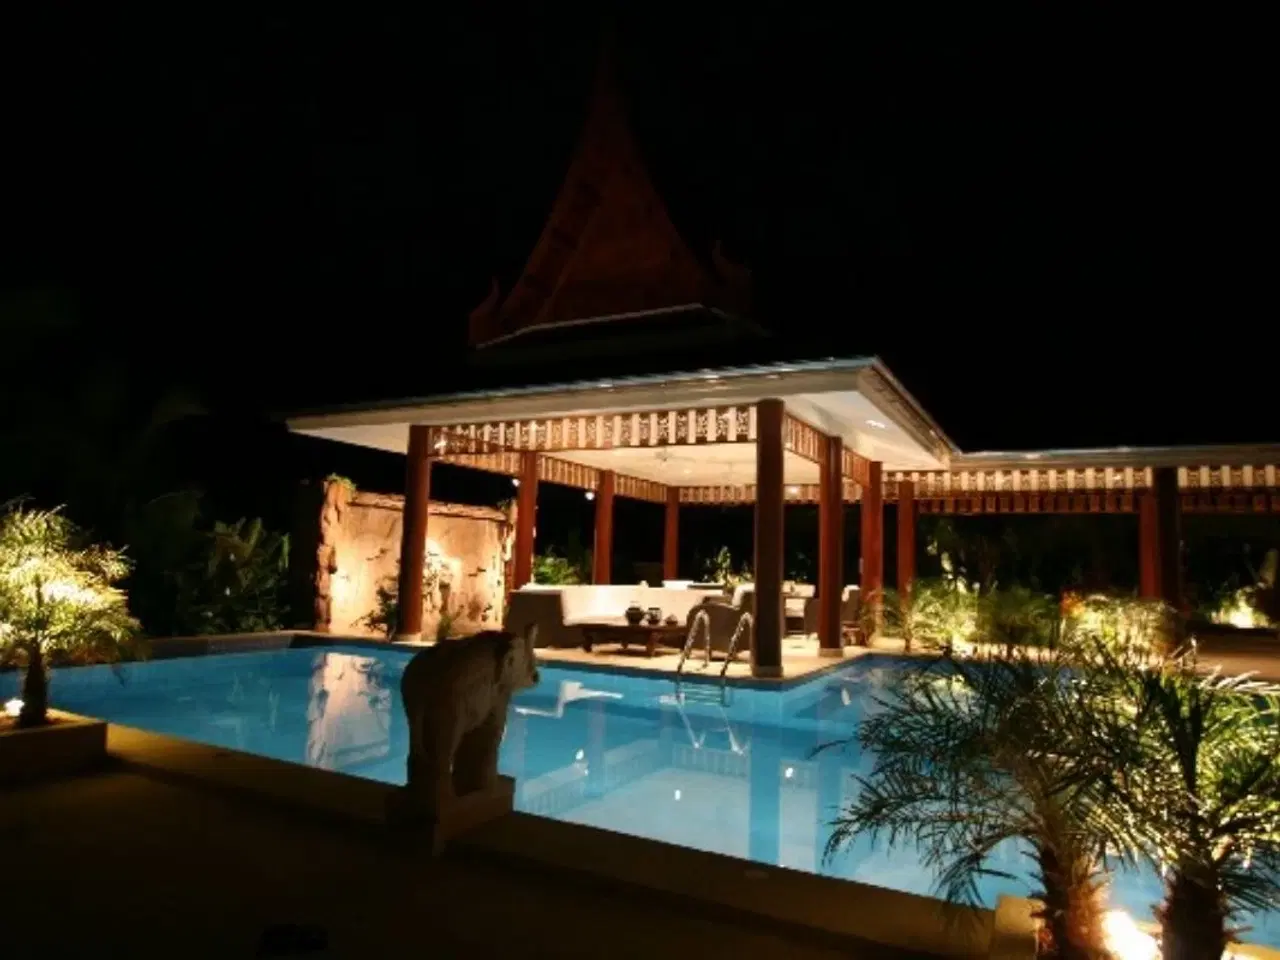 Billede 3 - Lej bolig i Hua Hin Thailand, Pool villa